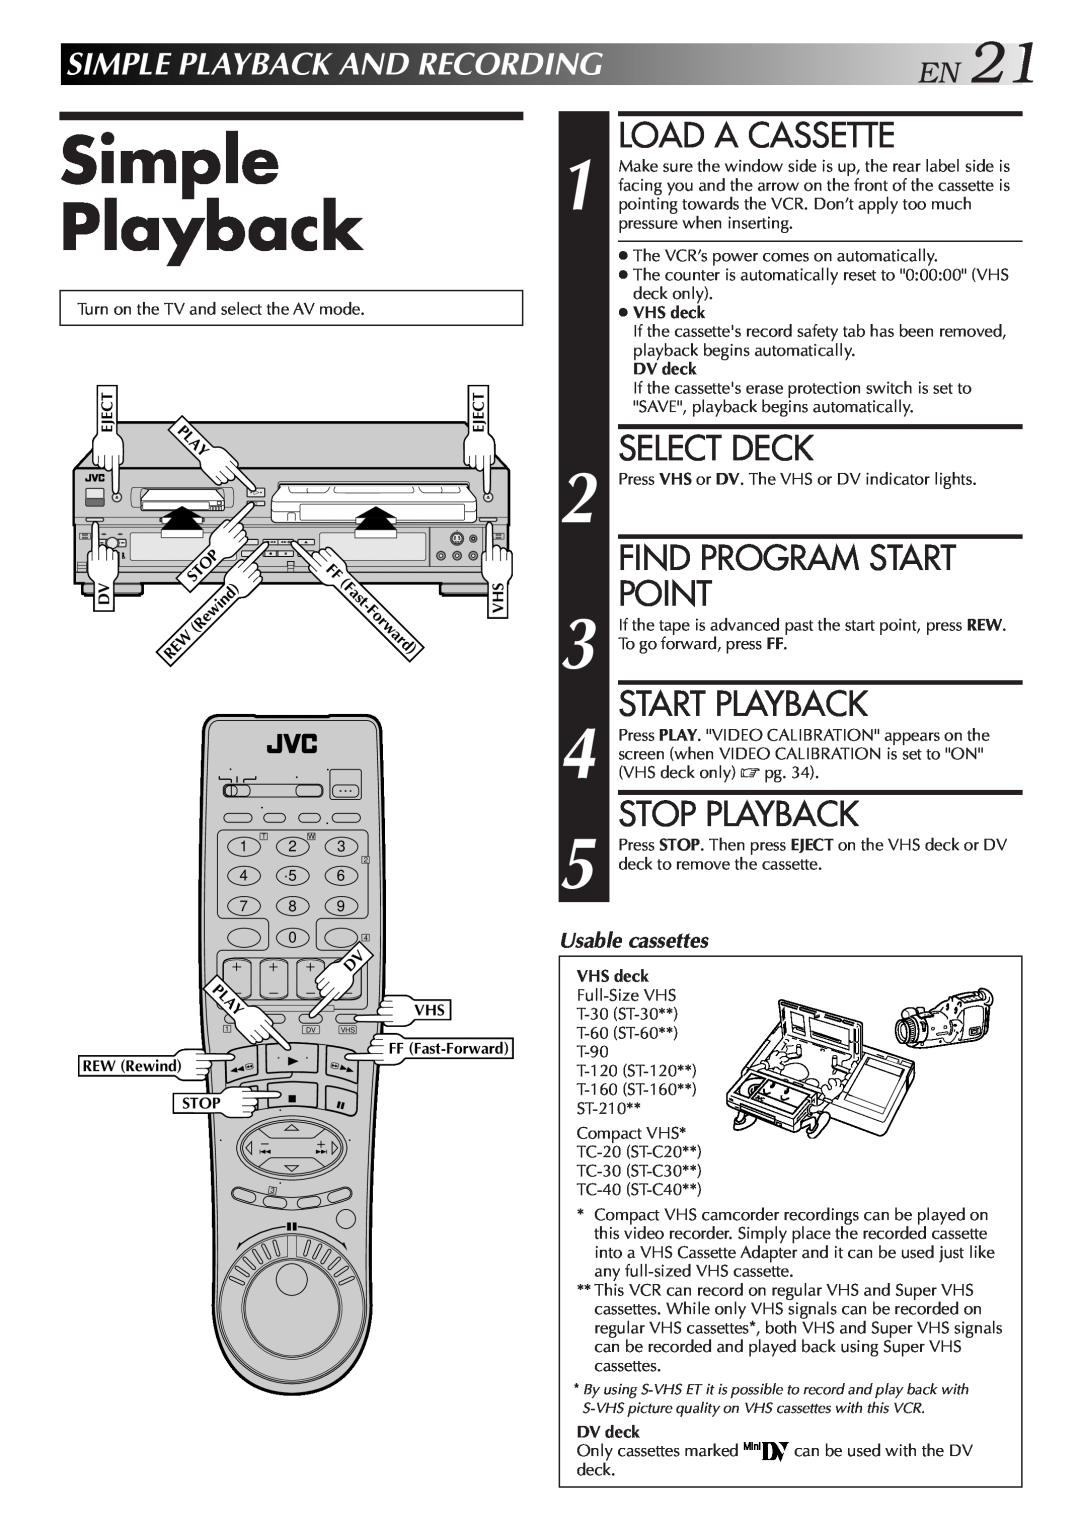 JVC Model HR-DVS1U Simple Playback, Load A Cassette, Select Deck, Find Program Start, Point, Start Playback, Stop Playback 